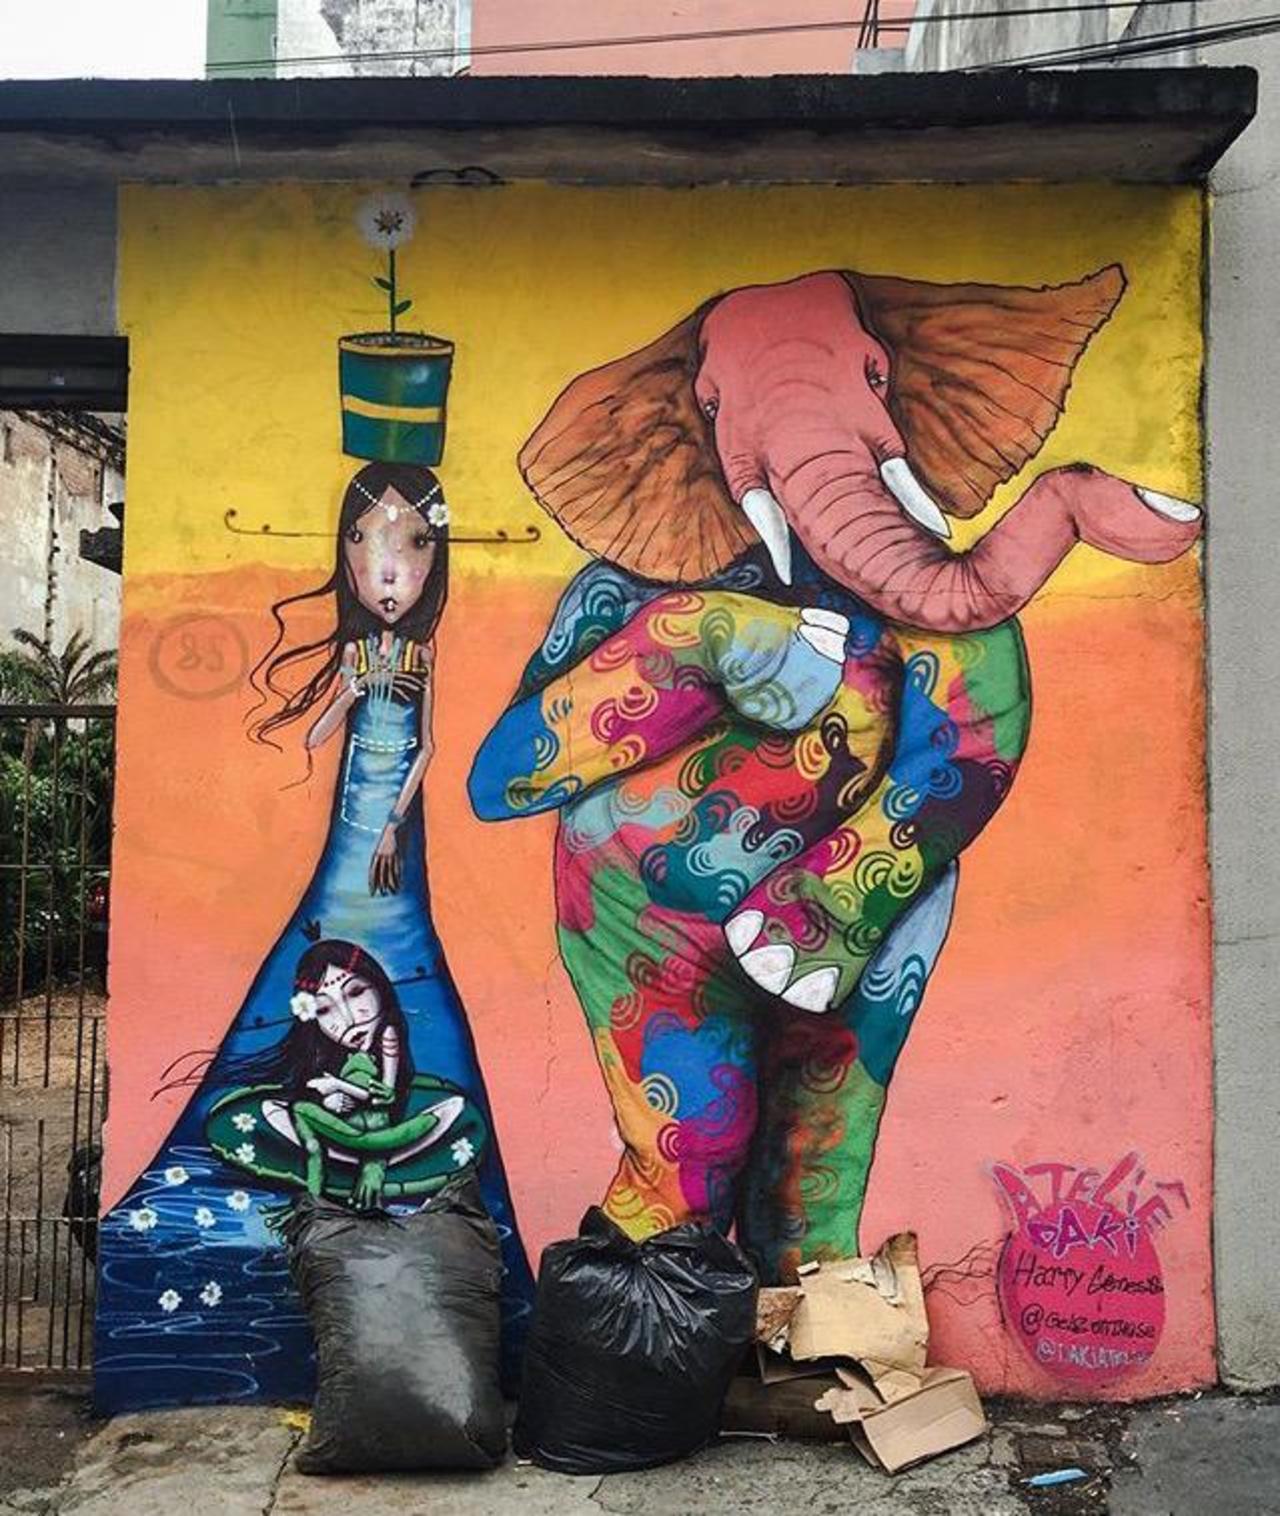 Street Art by Harry Geneis & Gelson in São Paulo #art #mural #graffiti #streetart http://t.co/SlLbhuMZfD … … http://twitter.com/GoogleStreetArt/status/648016473831645184/photo/1/large?utm_source=fb&utm_medium=fb&utm_campaign=charlesjackso14&utm_content=648021471982452736